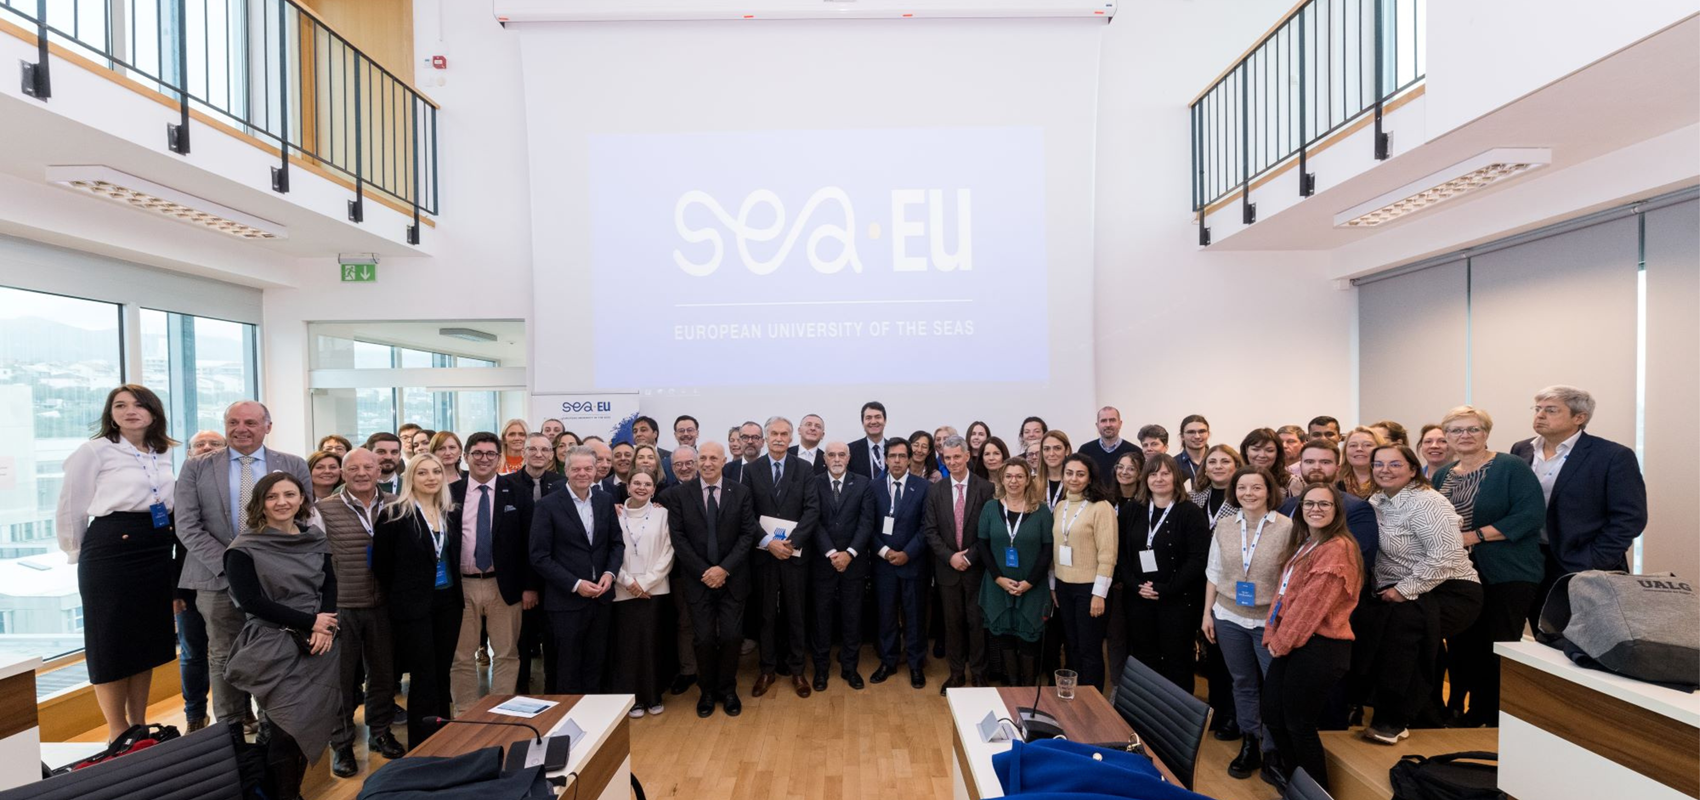 SEA-EU Governing Week in Split